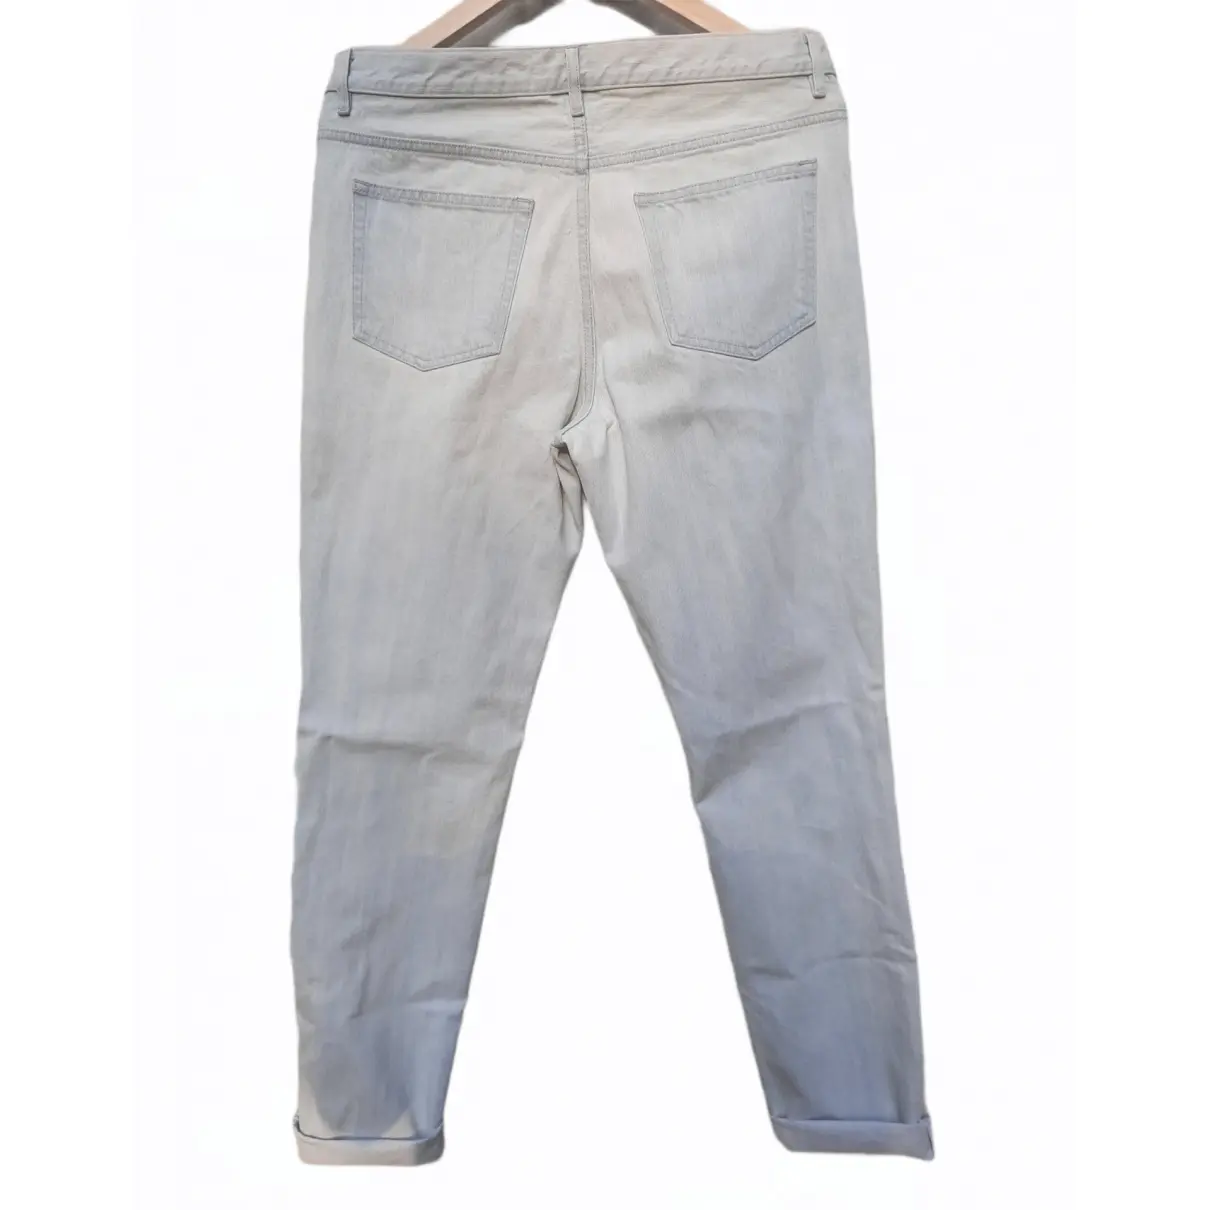 Buy APC Trousers online